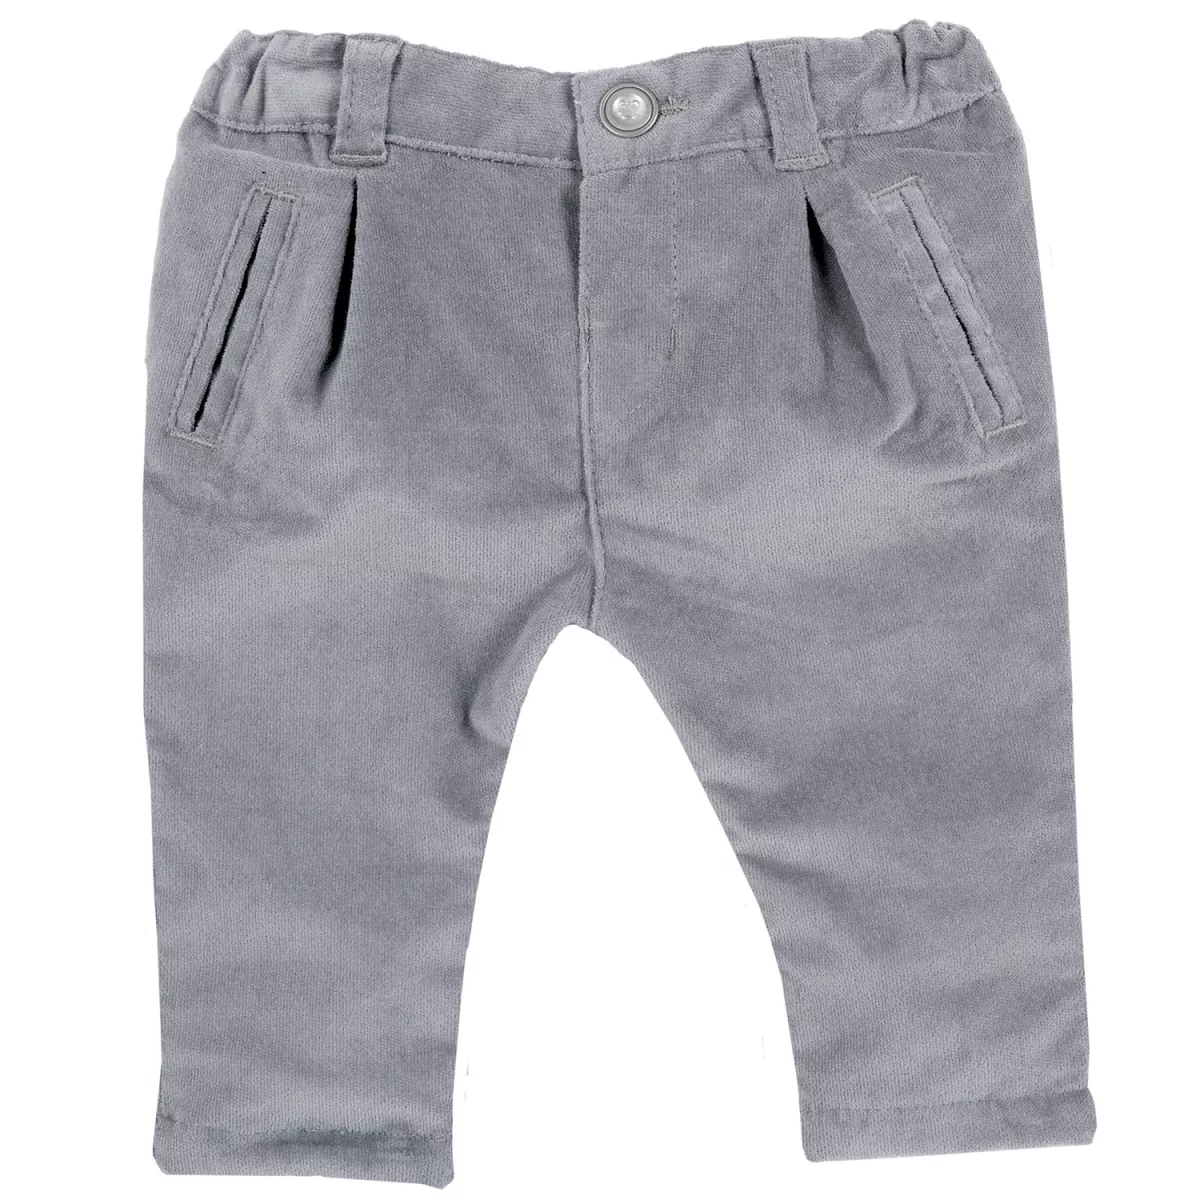 Pantalon copii Chicco, gri inchis, 56